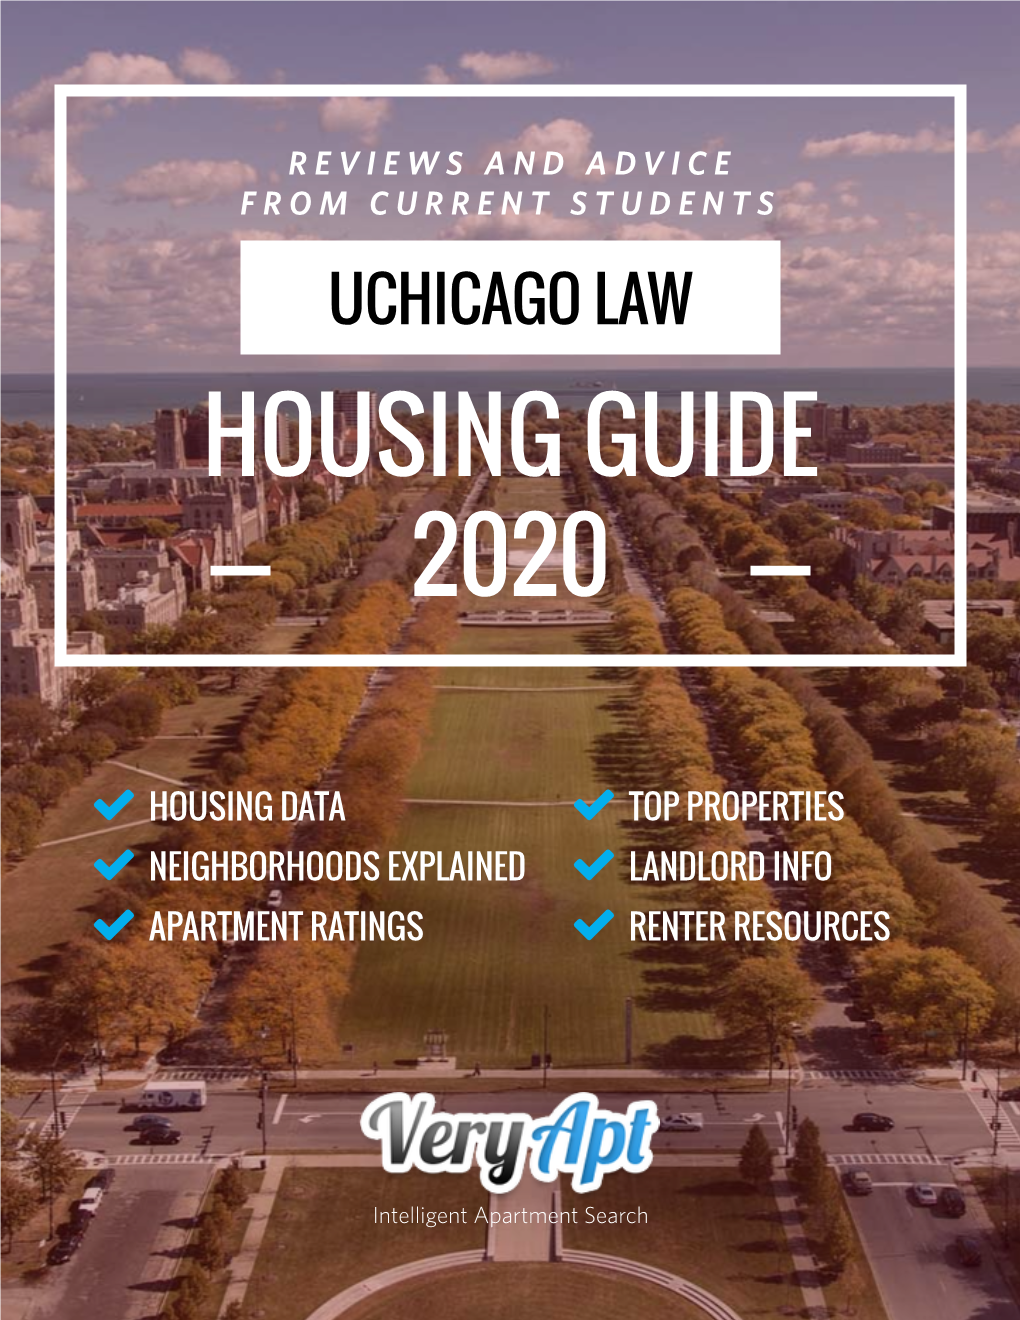 Housing Guide 2020